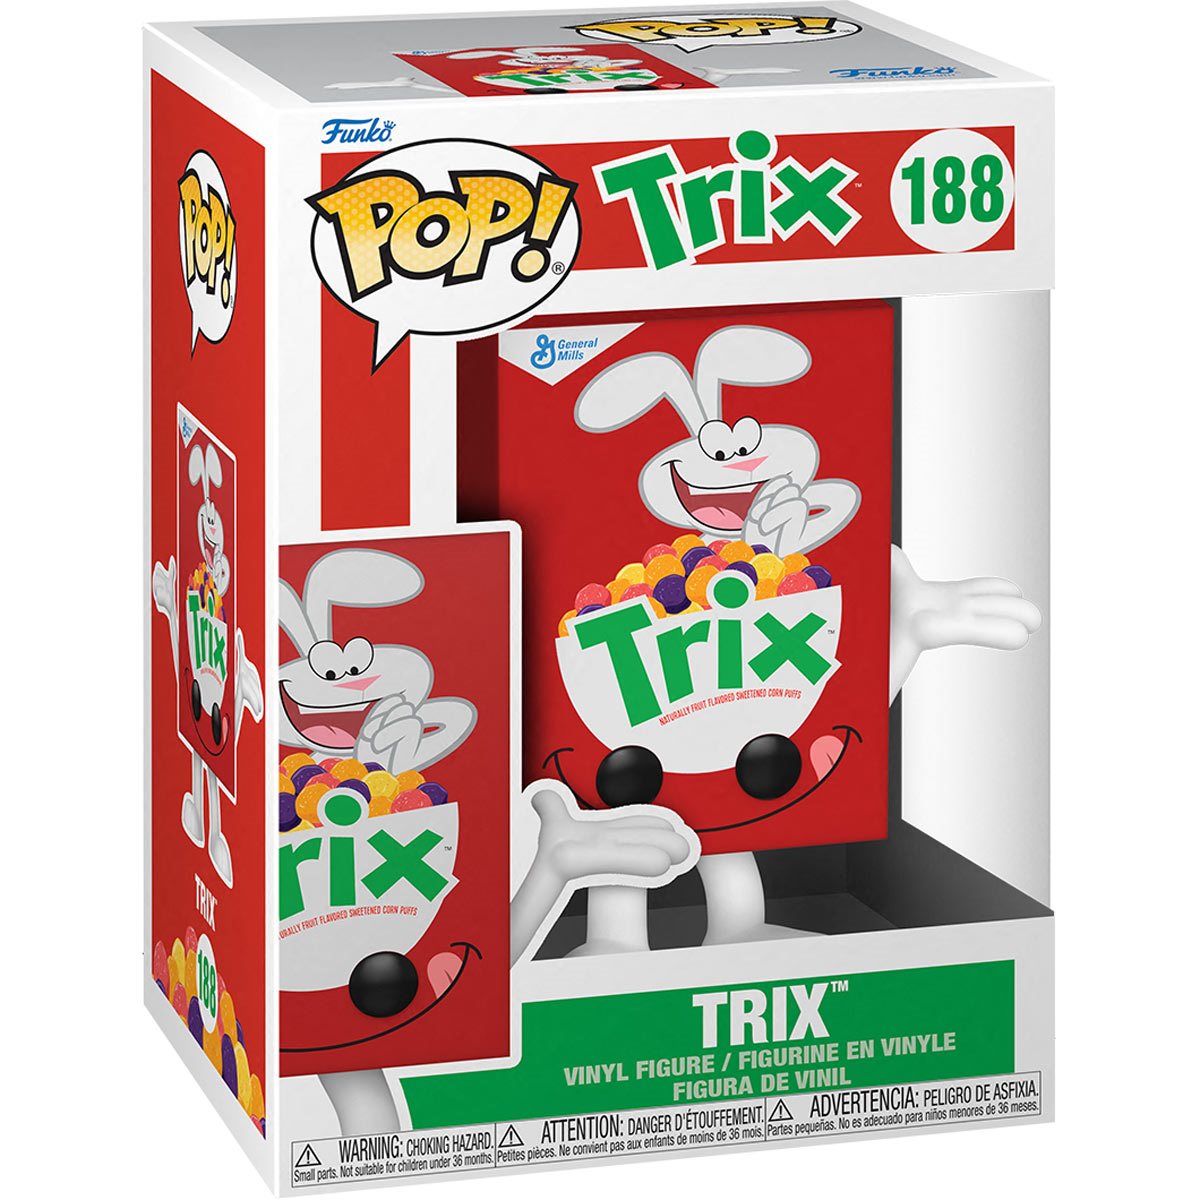 Ad Icons: Cereal Box - Trix Pop! Vinyl Figure (188)